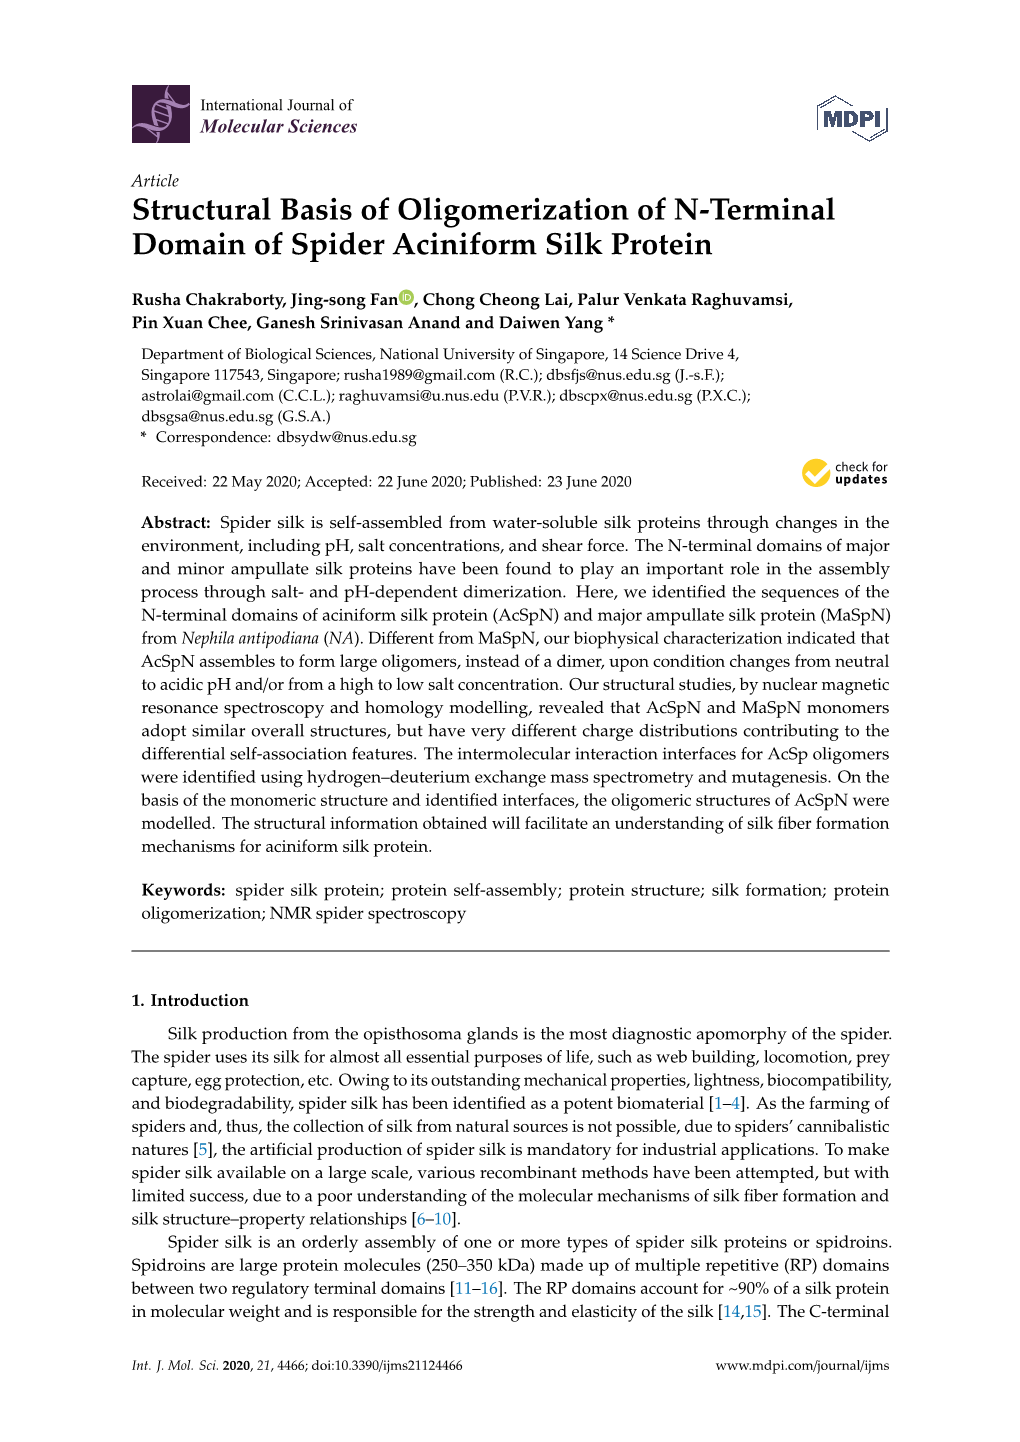 Structural Basis of Oligomerization of N-Terminal Domain of Spider Aciniform Silk Protein